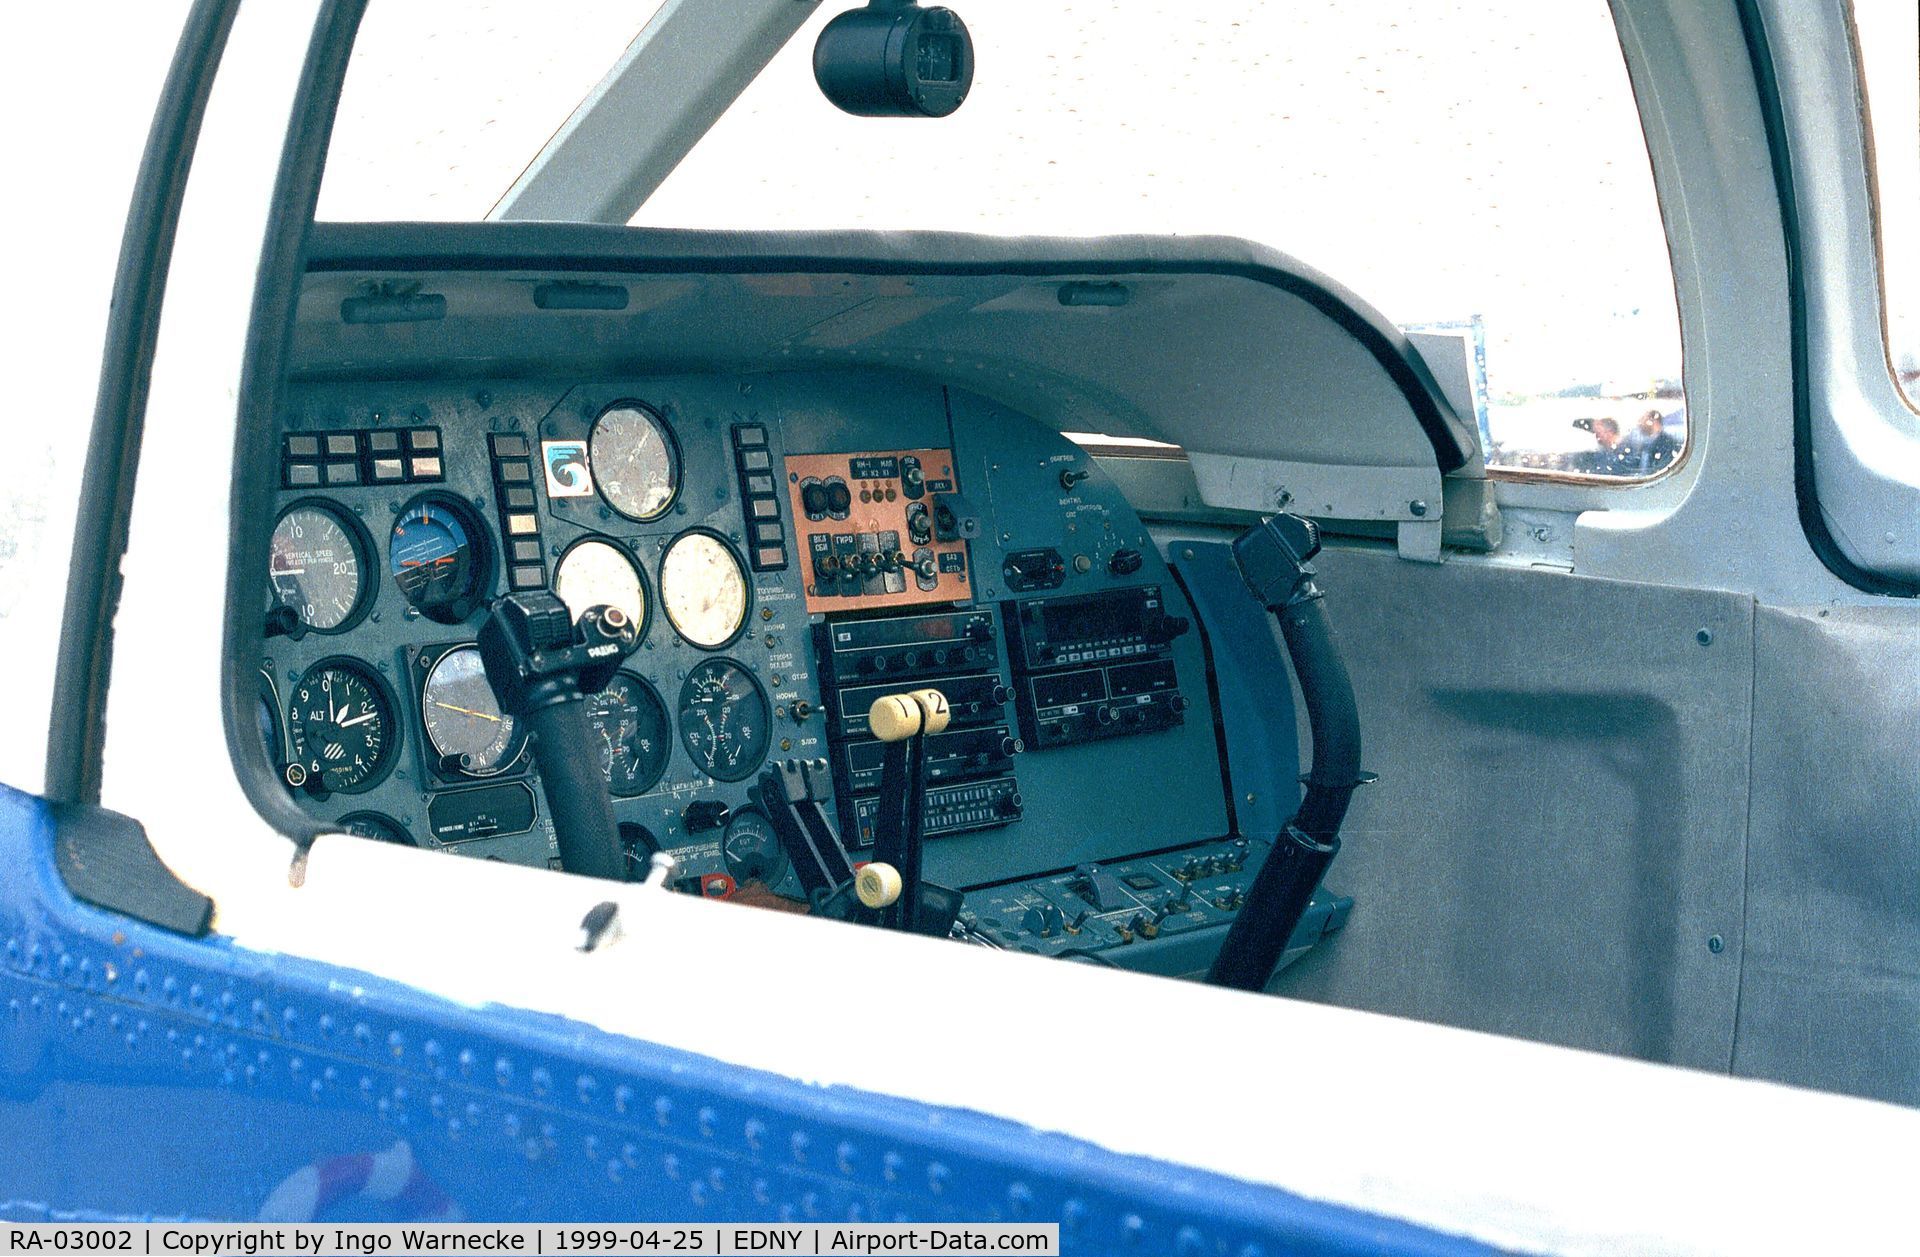 RA-03002, 1997 Beriev Be-103 C/N 3002, Beriev Be-103 second prototype at the Aero 1999, Friedrichshafen  #c